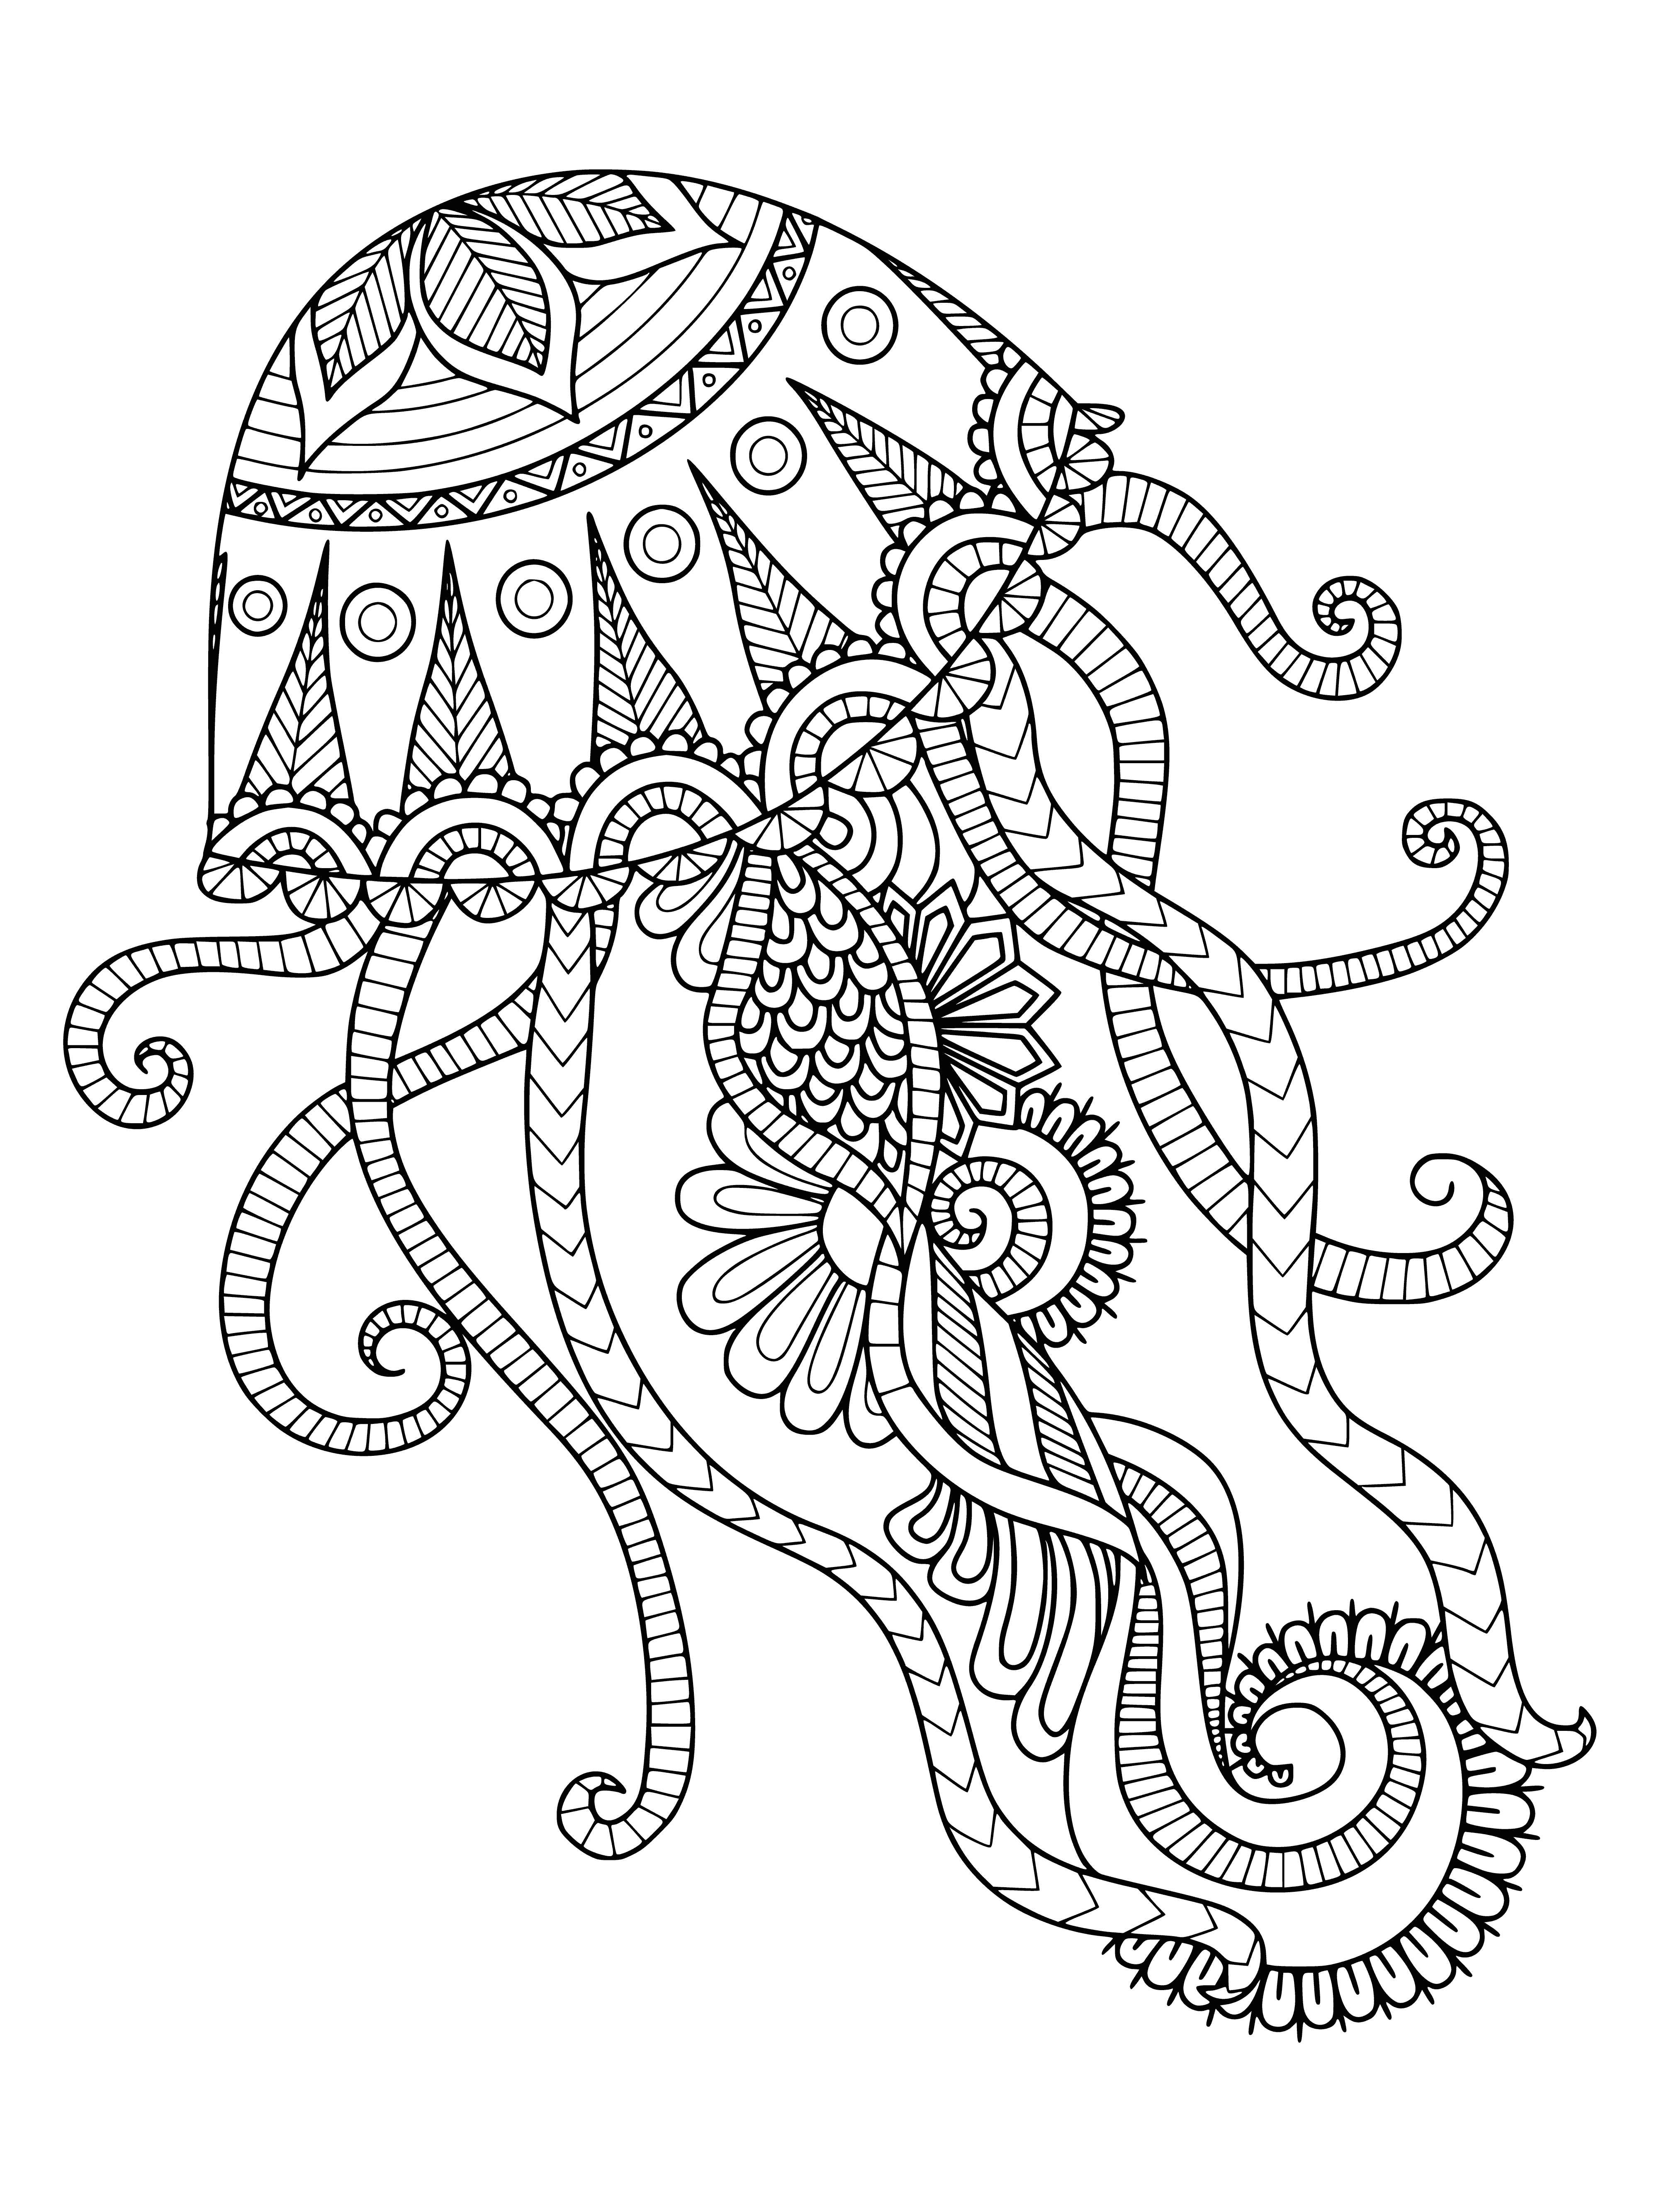 Medusa página para colorear